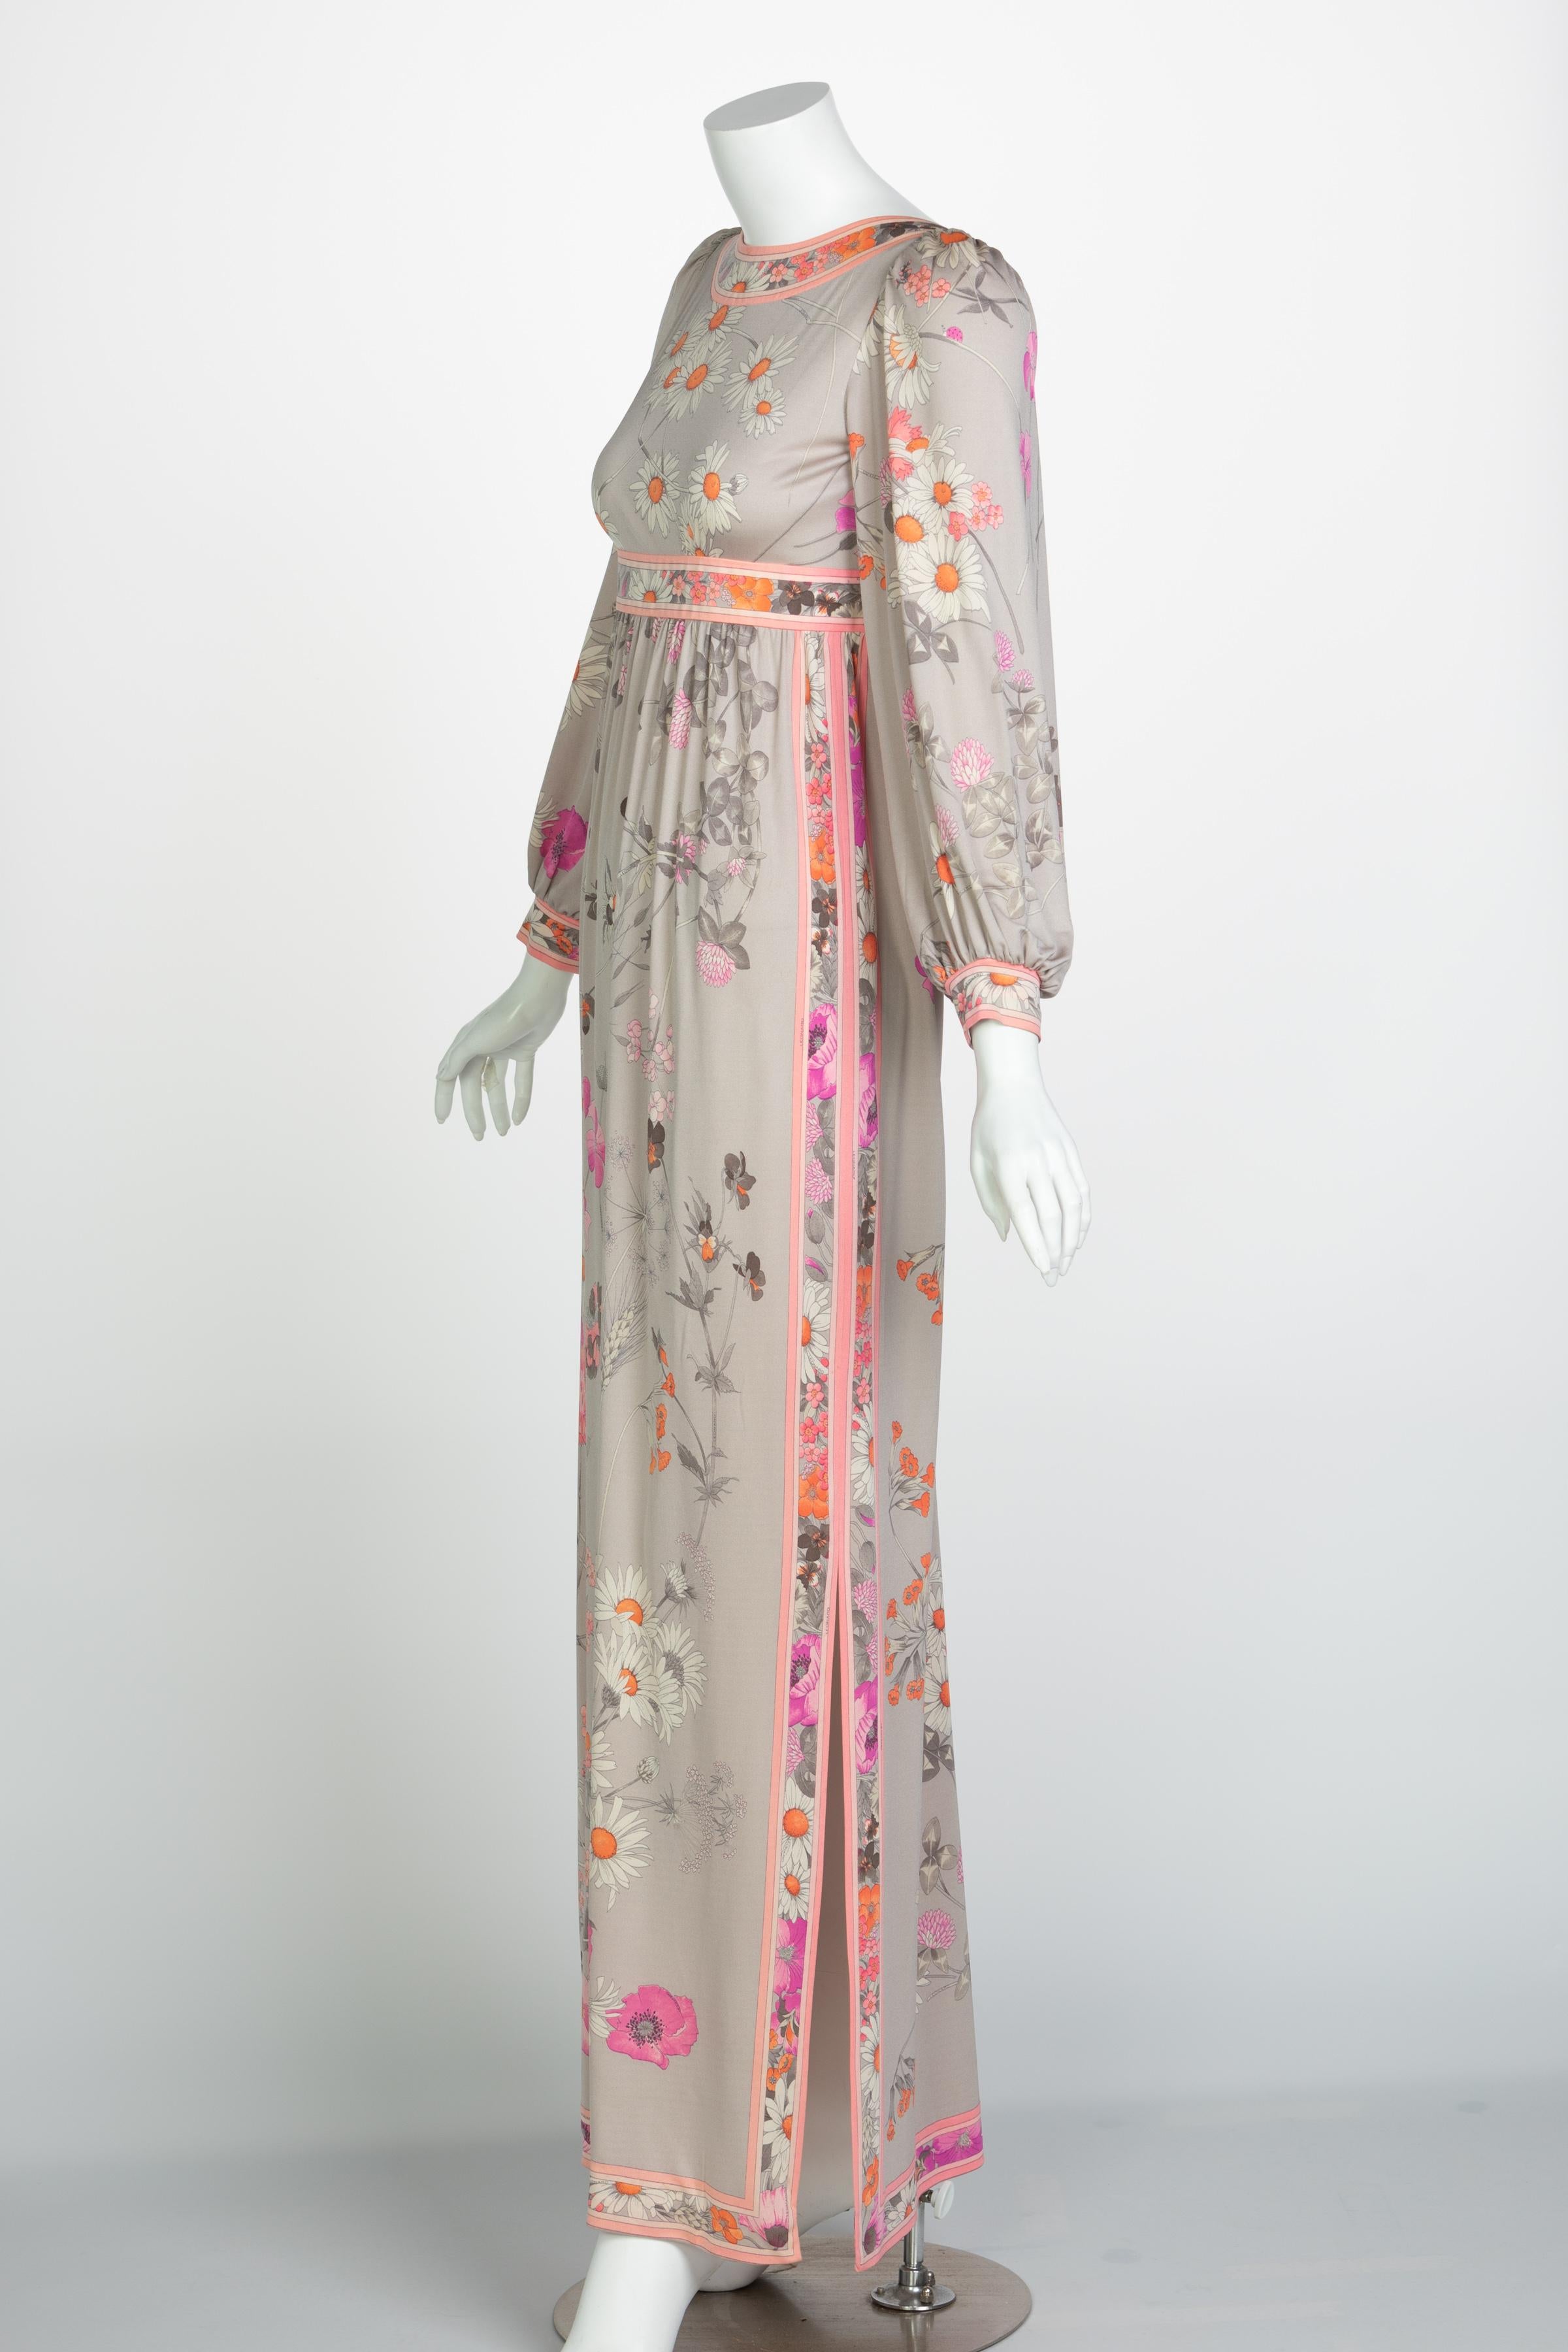 Leonard Paris Silk Floral Floral Print Open Square-Back Maxi Dress, 1970s In Good Condition For Sale In Boca Raton, FL